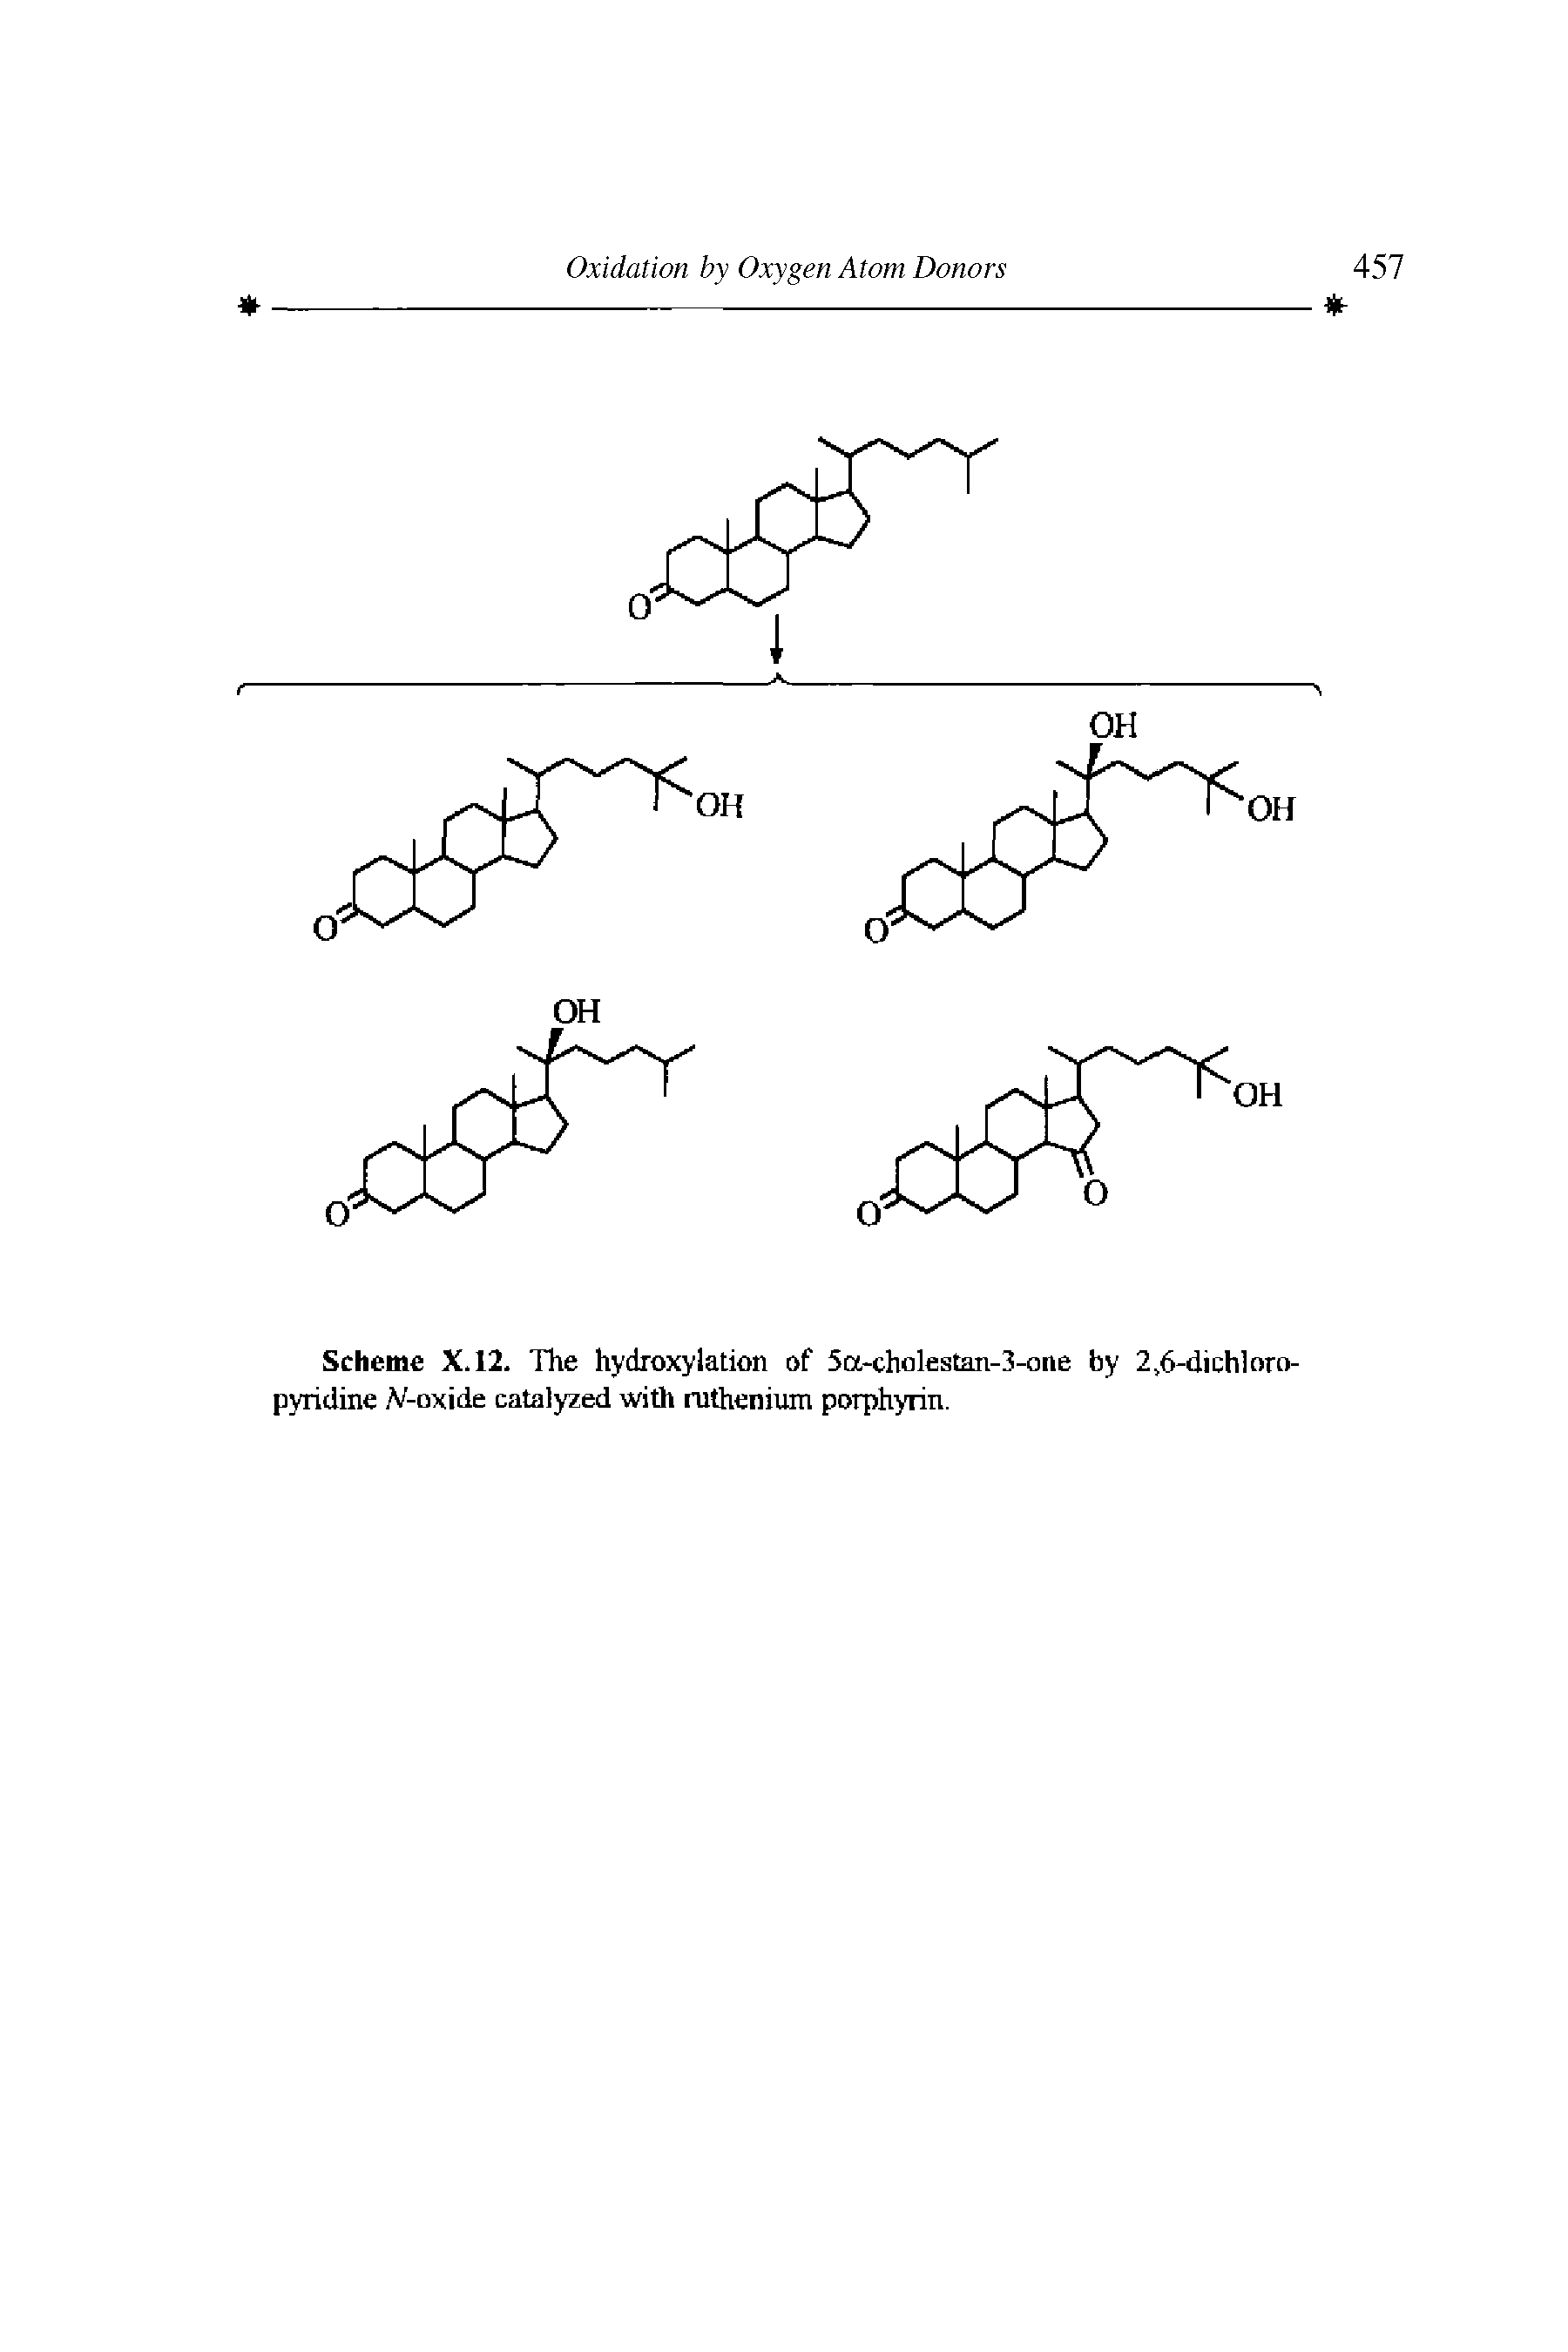 Scheme X.12. The hydroxylation of 5a-cholestan-3-one by 2,6-dichloro-pyridine N-oxide catalyzed with ruthenium porphyrin.